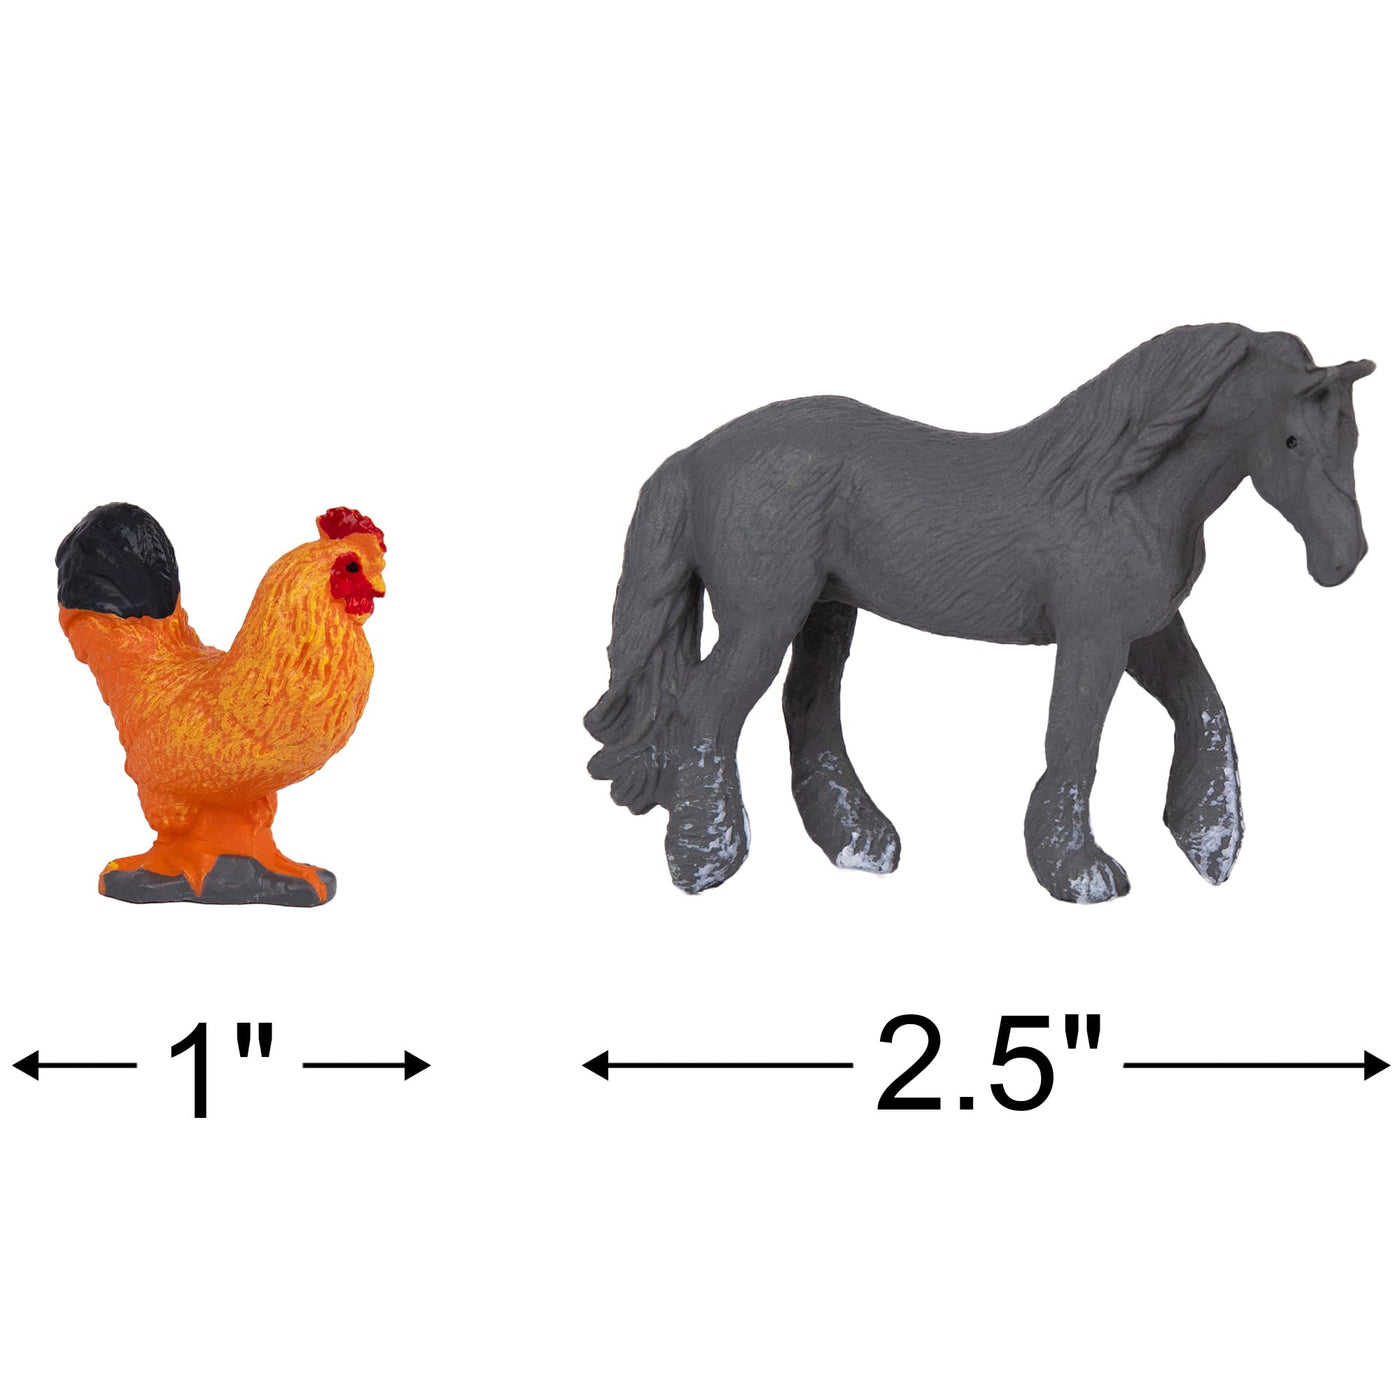 Farm Animal Figurines - Farm Animal Figures Set Includes 12 Pieces - 2 inch Barnyard Farm Animal Cake Toppers with a Lifelike Design